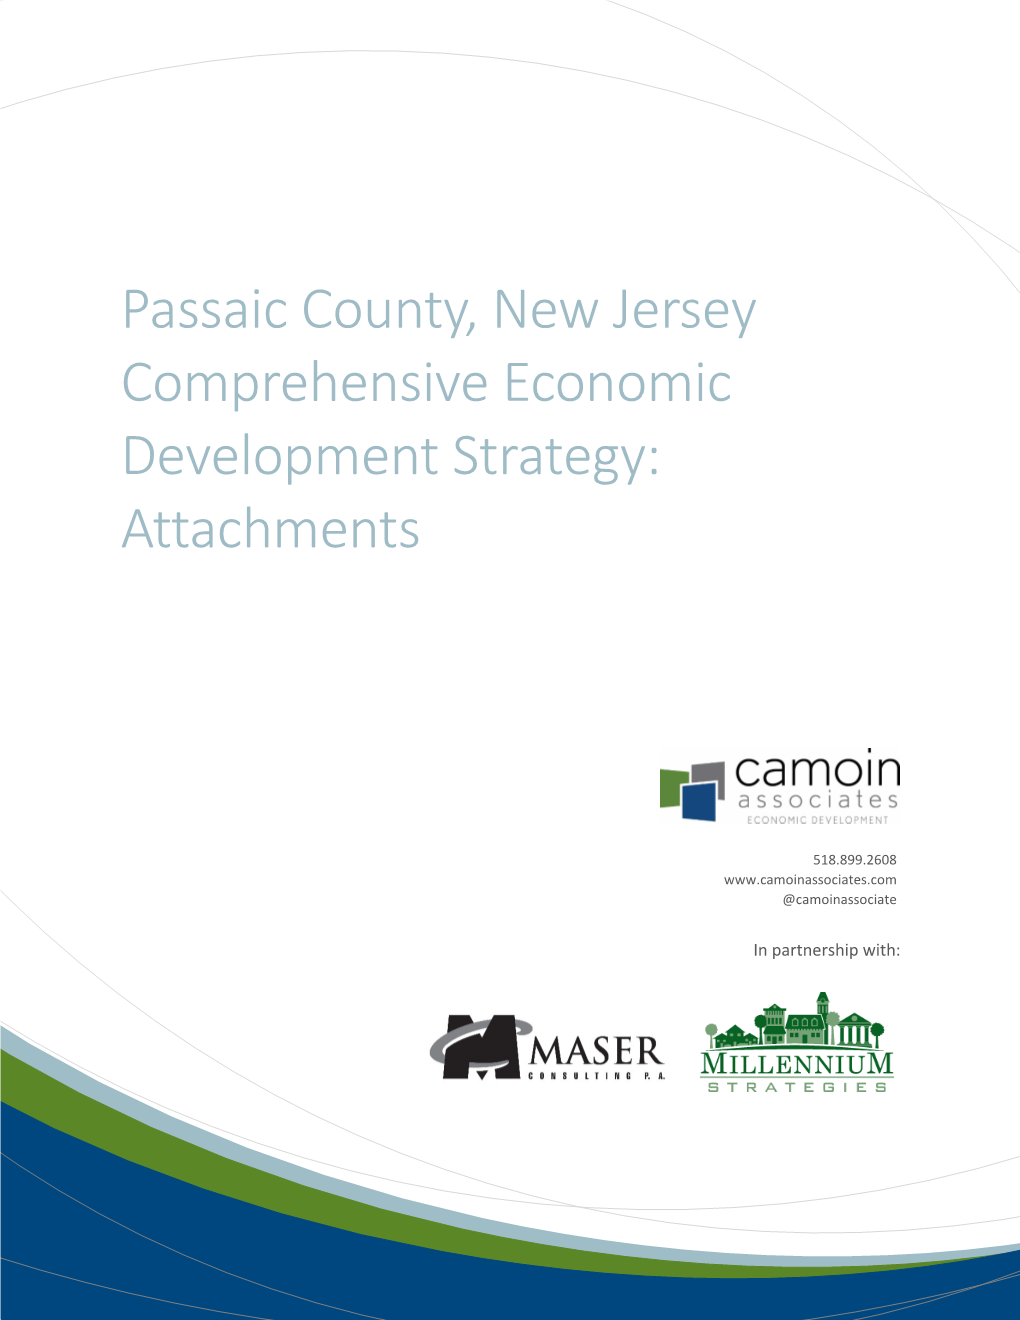 Passaic County, New Jersey Comprehensive Economic Development Strategy: Attachments